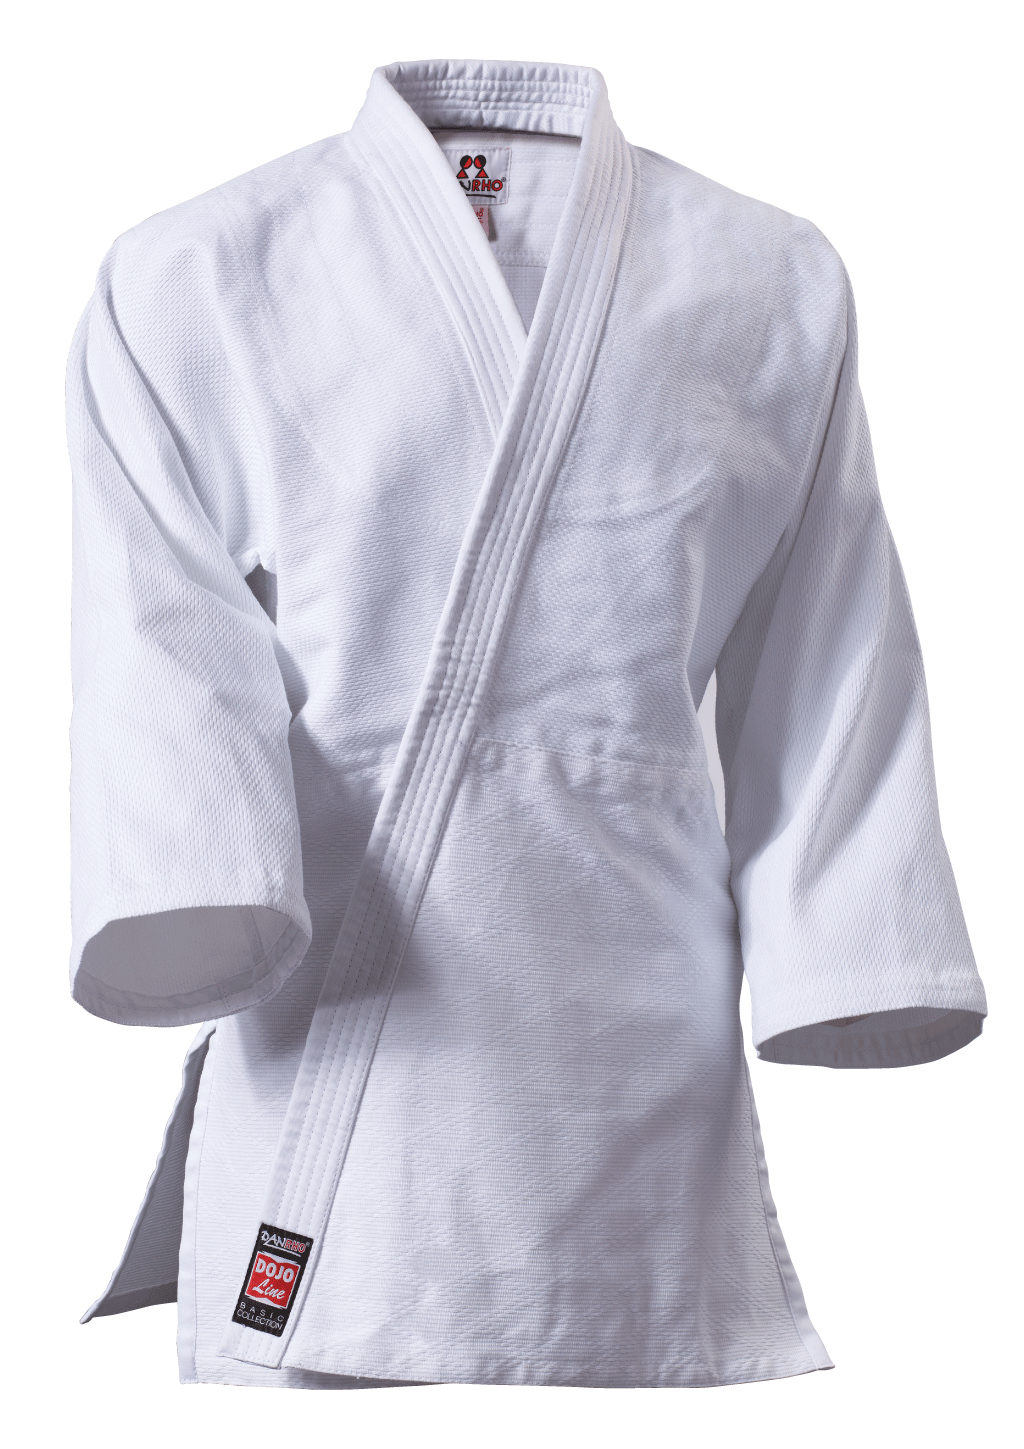 Dojo-Line Judoanzug Judo-Gi 100 cm - 140 cm